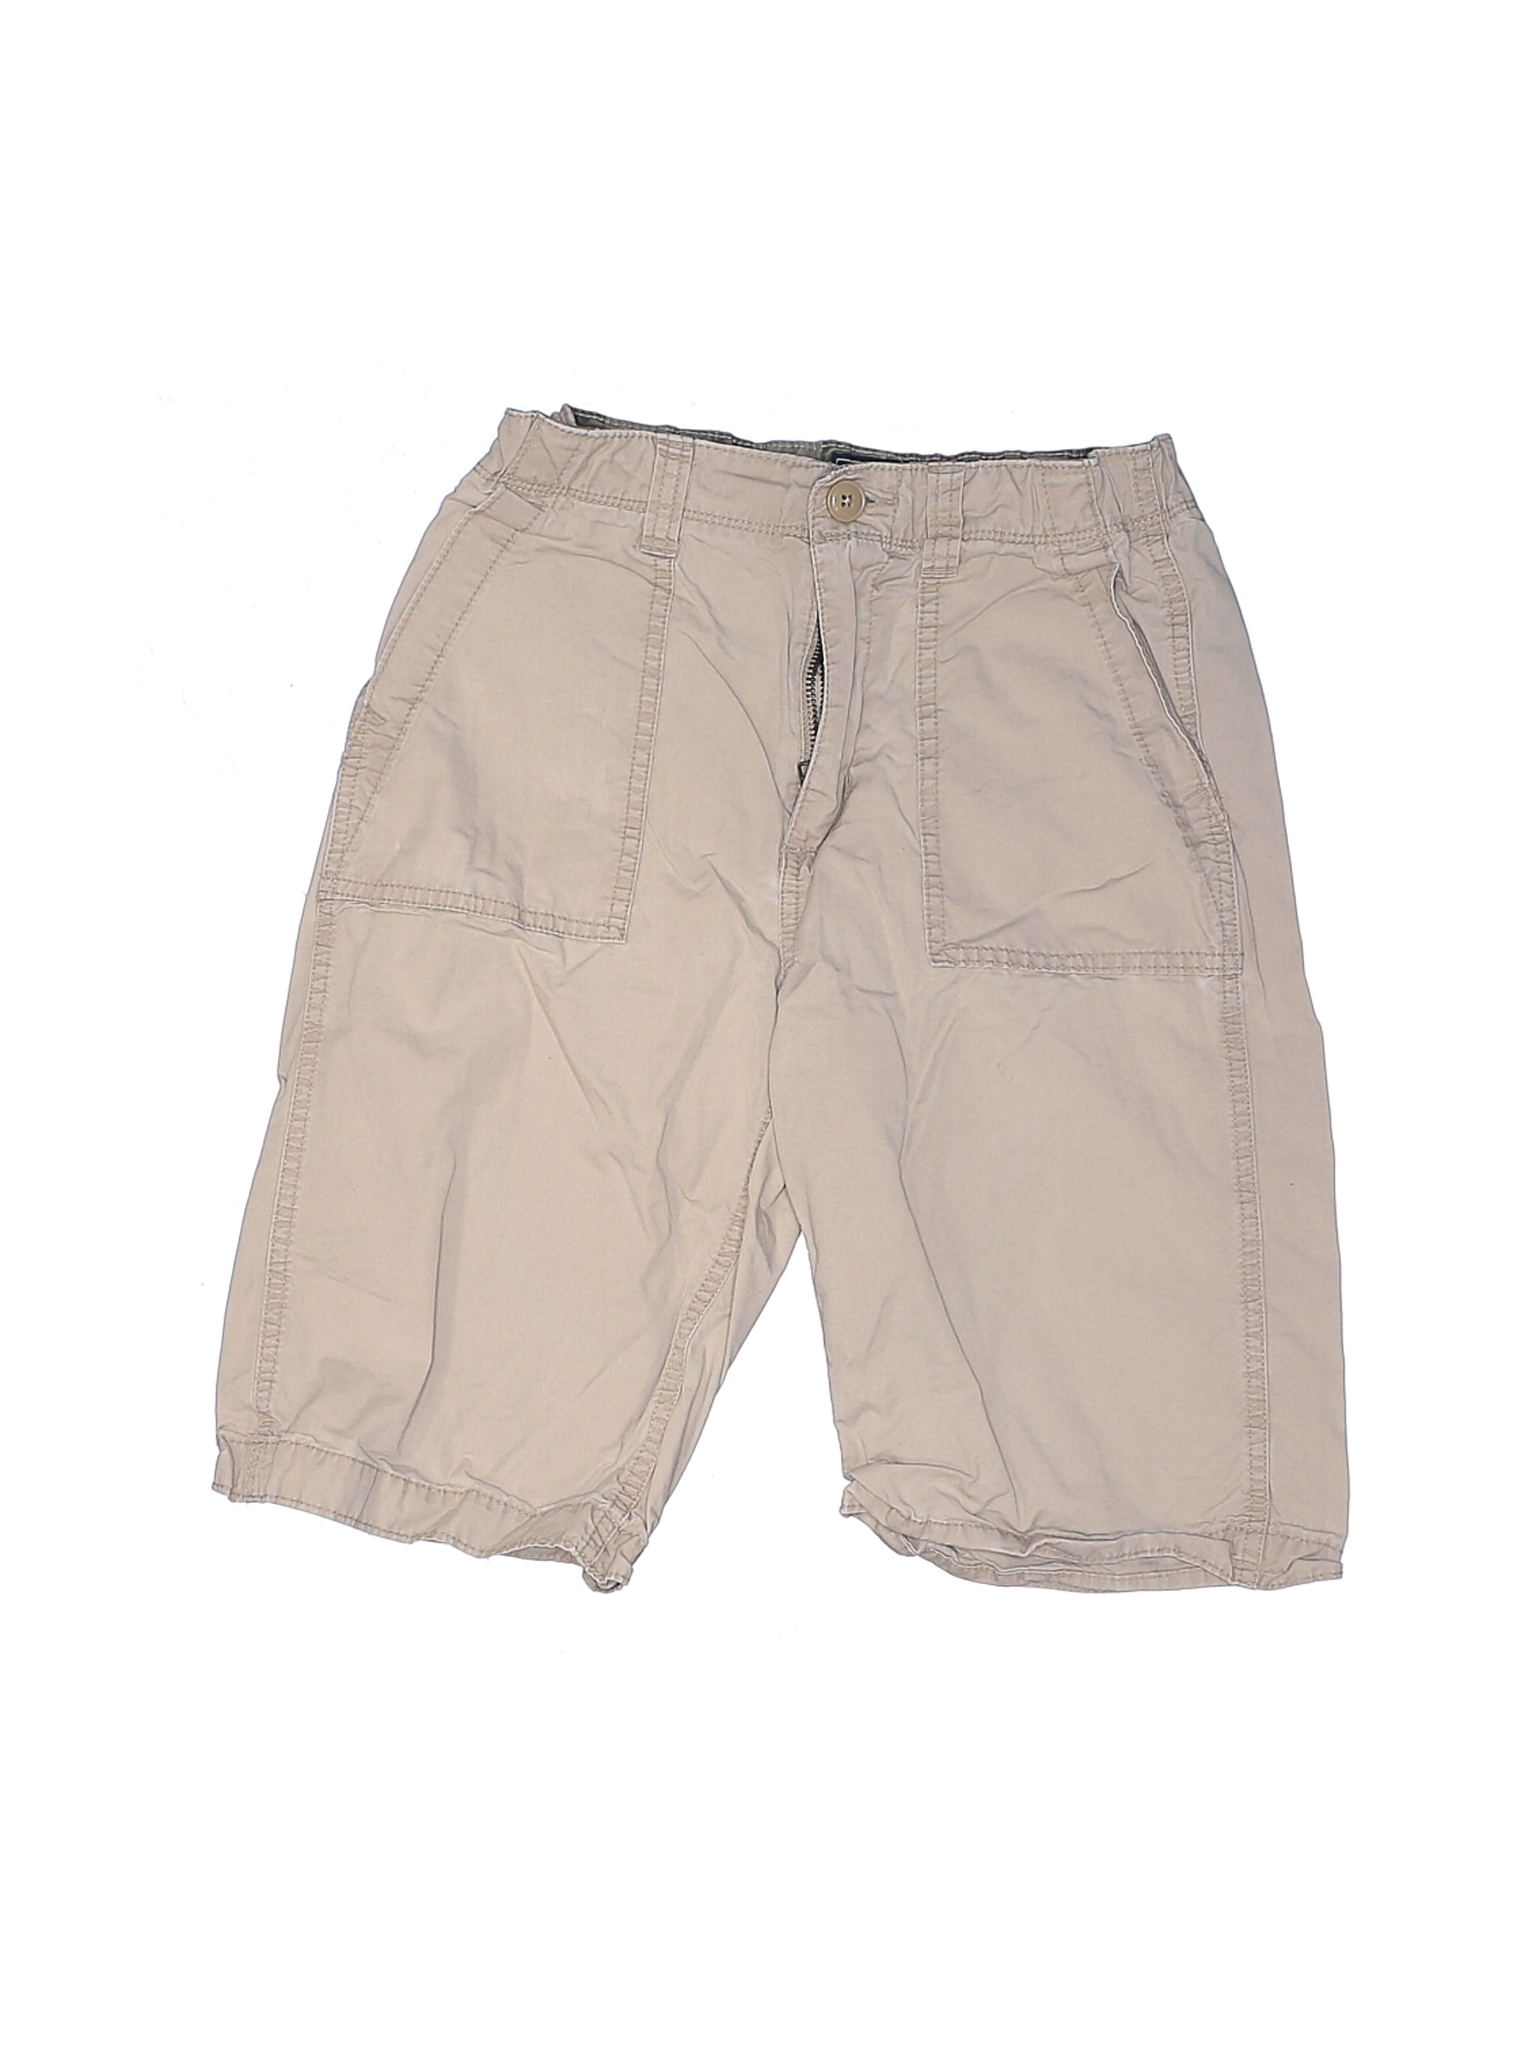 Gap Kids Boys Brown Shorts 16 | eBay